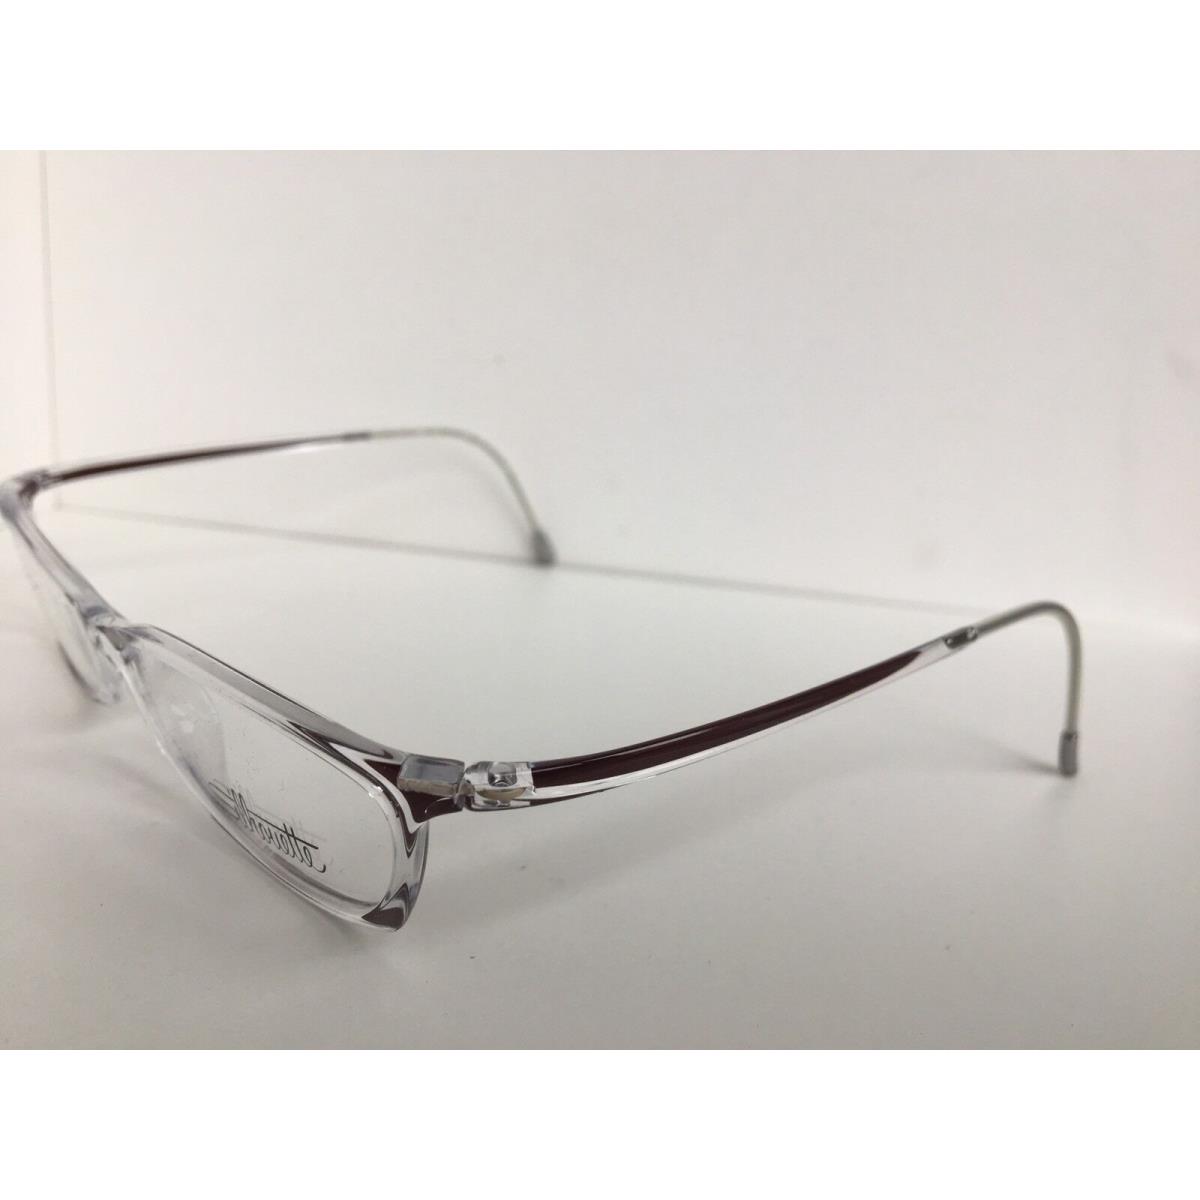 Silhouette eyeglasses  - Clear Frame 4